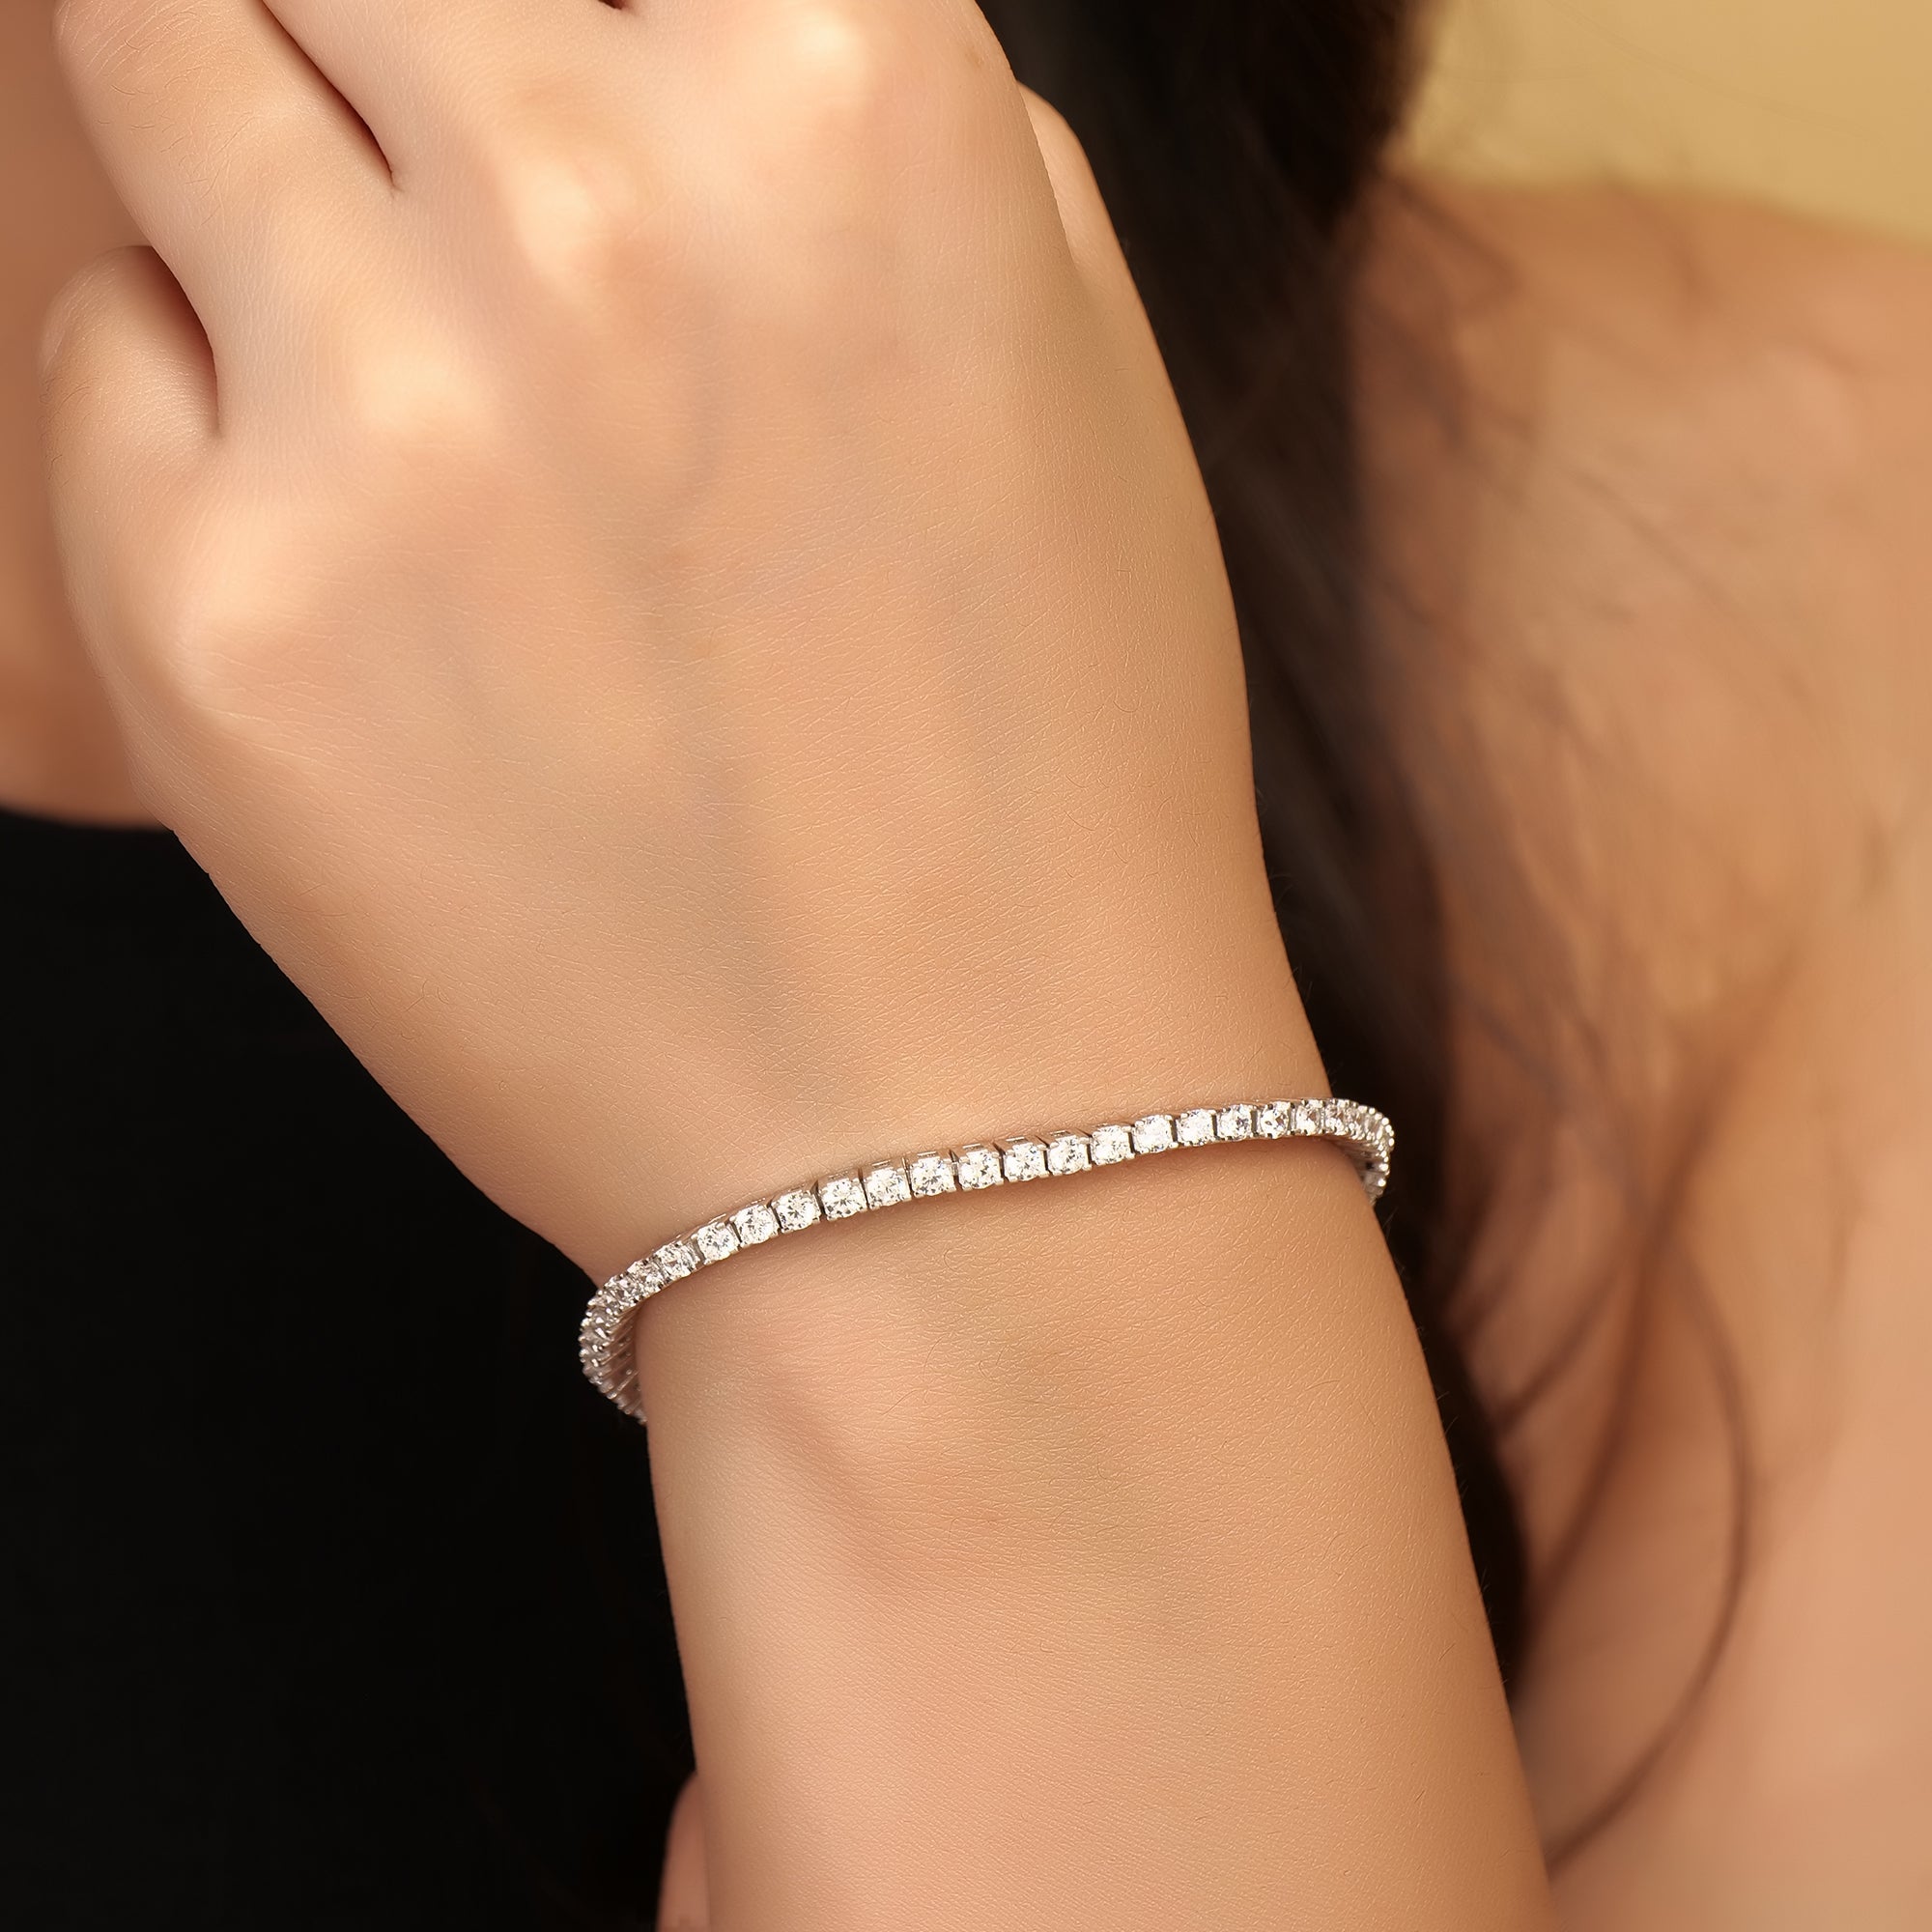 Diamond tennis silver bracelet